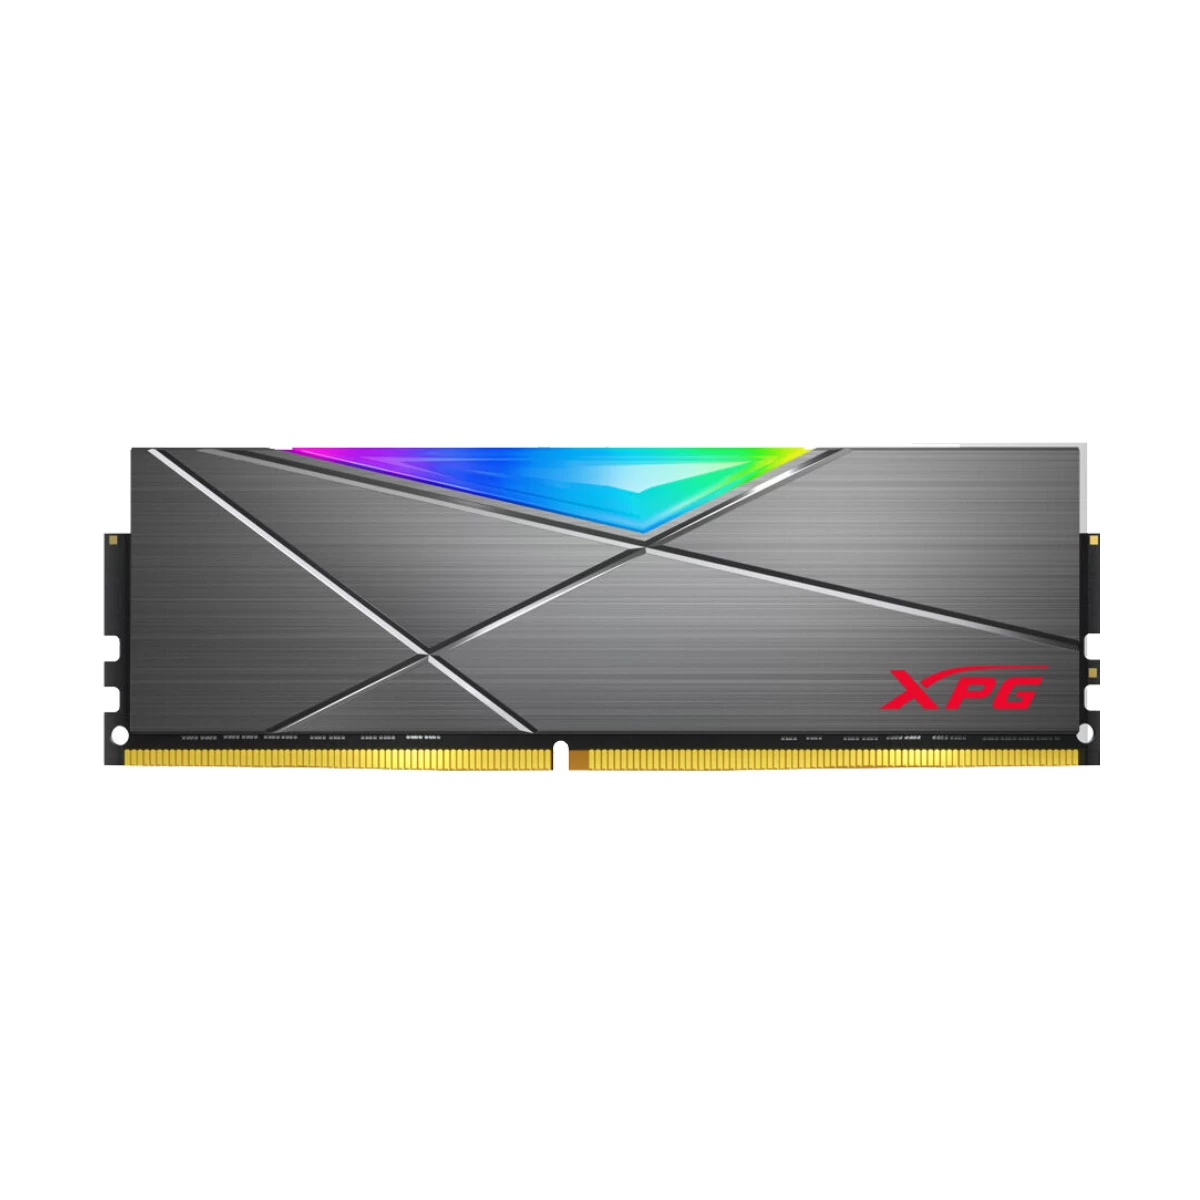 ADATA XPG Spectrix D50 RGB 32GB DDR4 3600MHz Gaming Desktop RAM